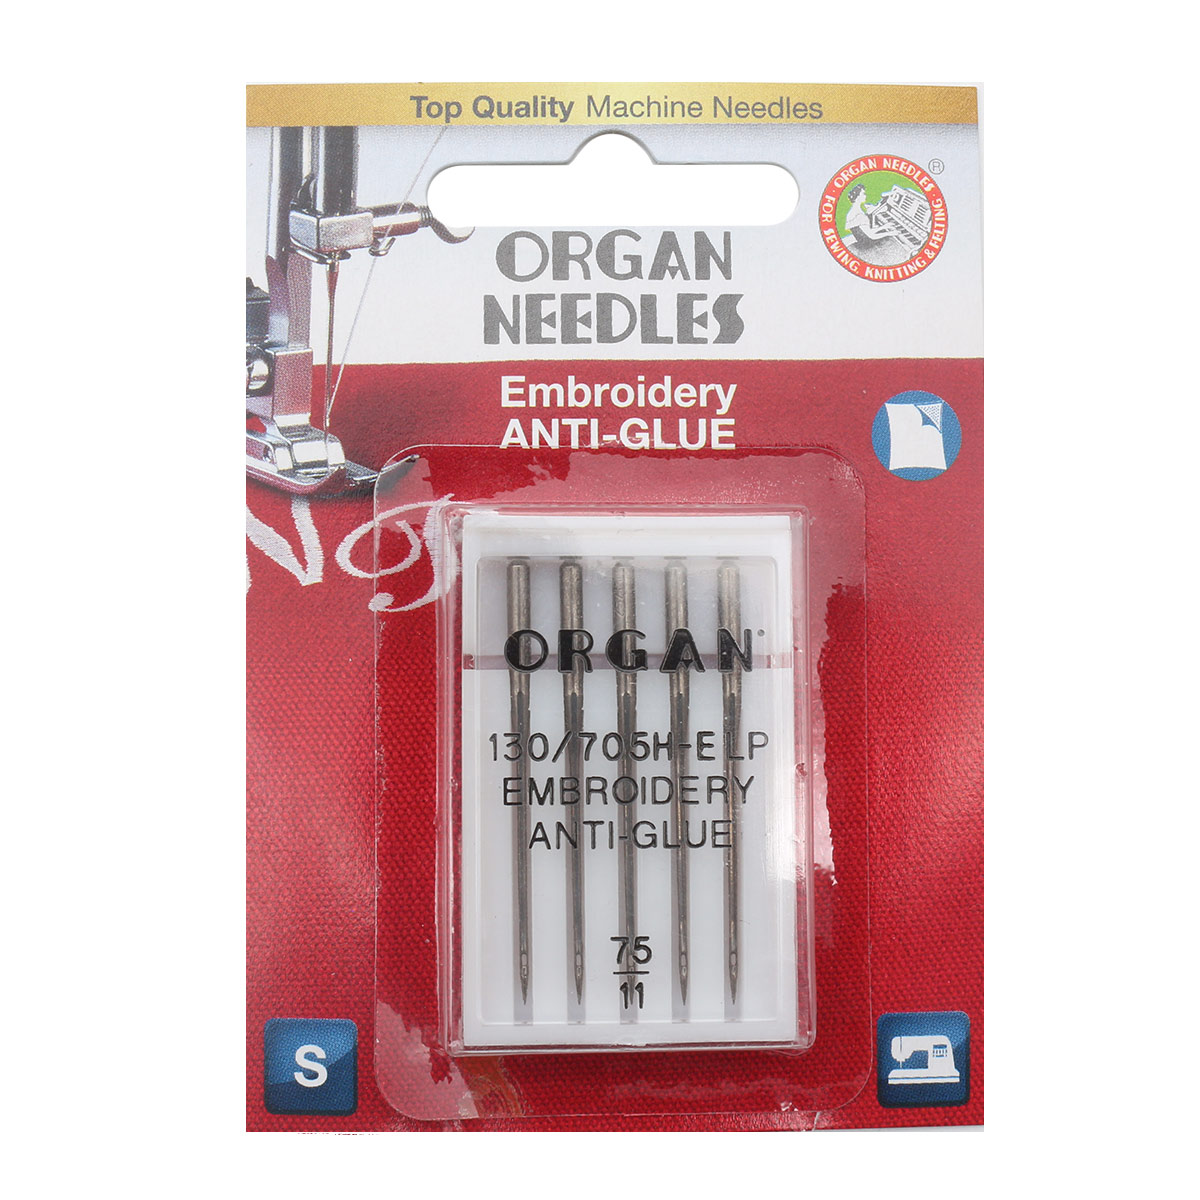 ORGAN иглы вышивальные Anti-Glue 5/75 Blister иглы organ вышивальные anti glue 5 75 blister